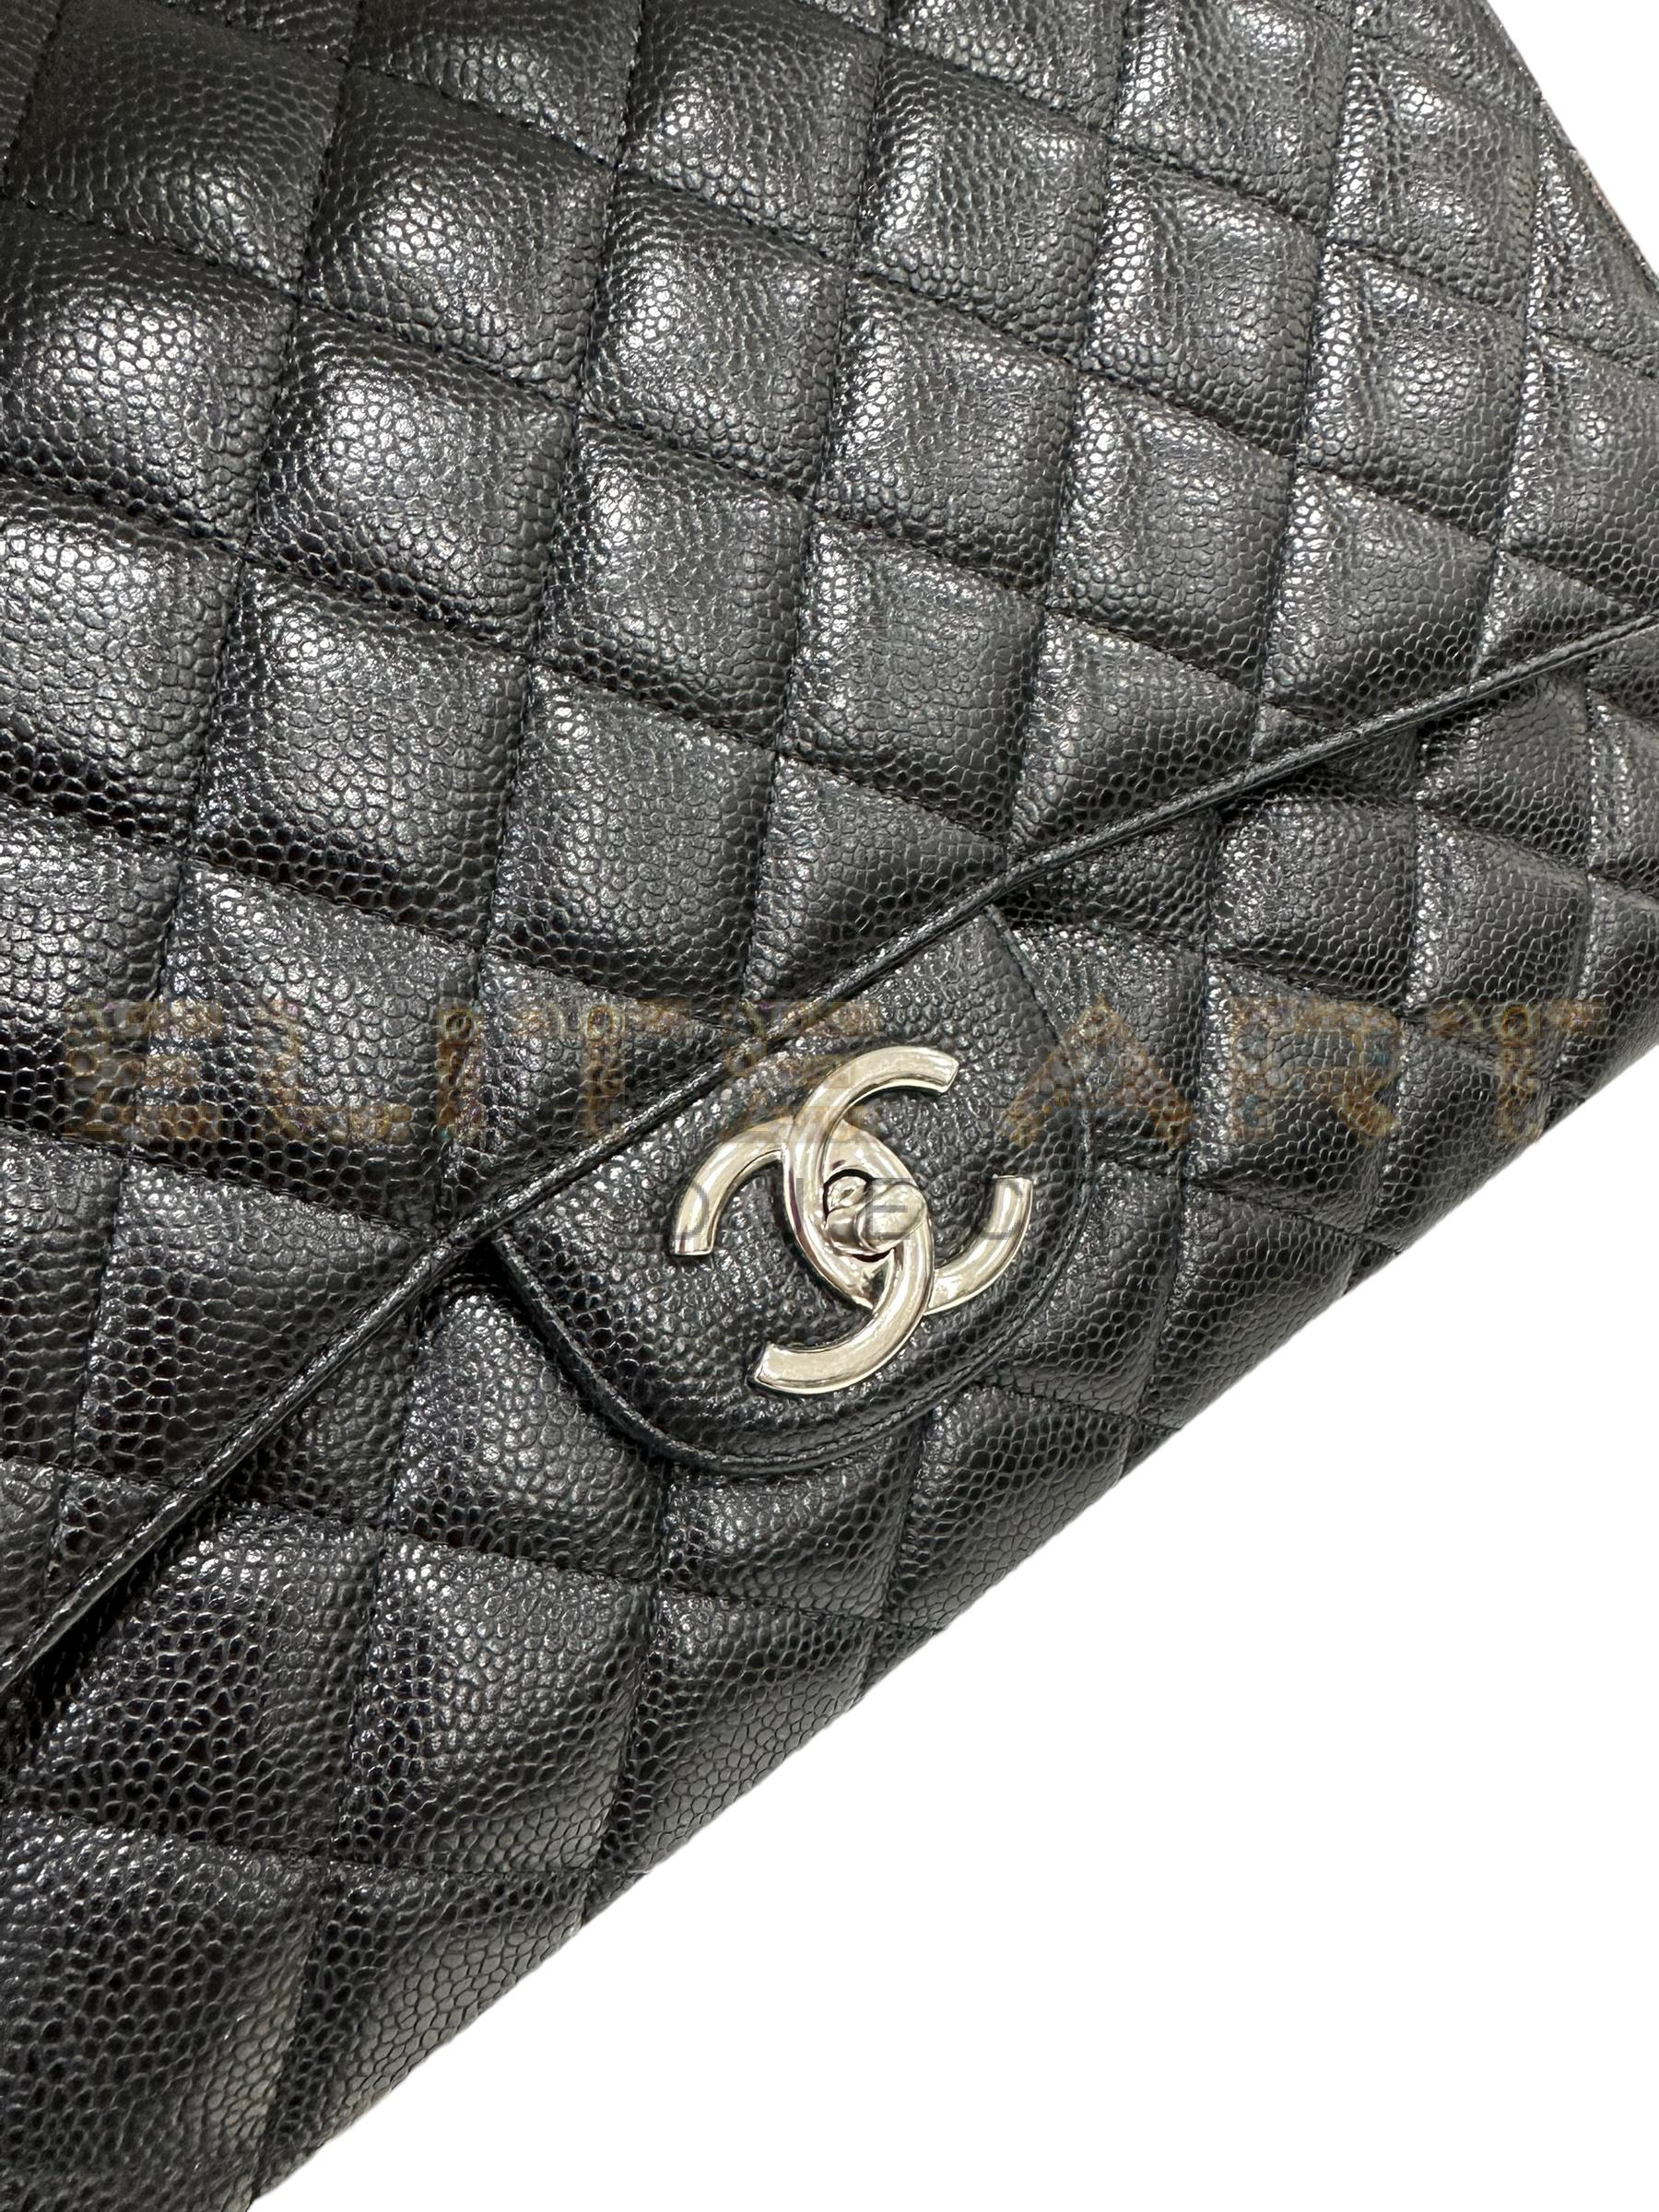 Chanel, Timeless Double Flap bag, Maxi Jumbo, black caviar leather, silver accents, Bordeaux leather, CC twist lock, excellent condition